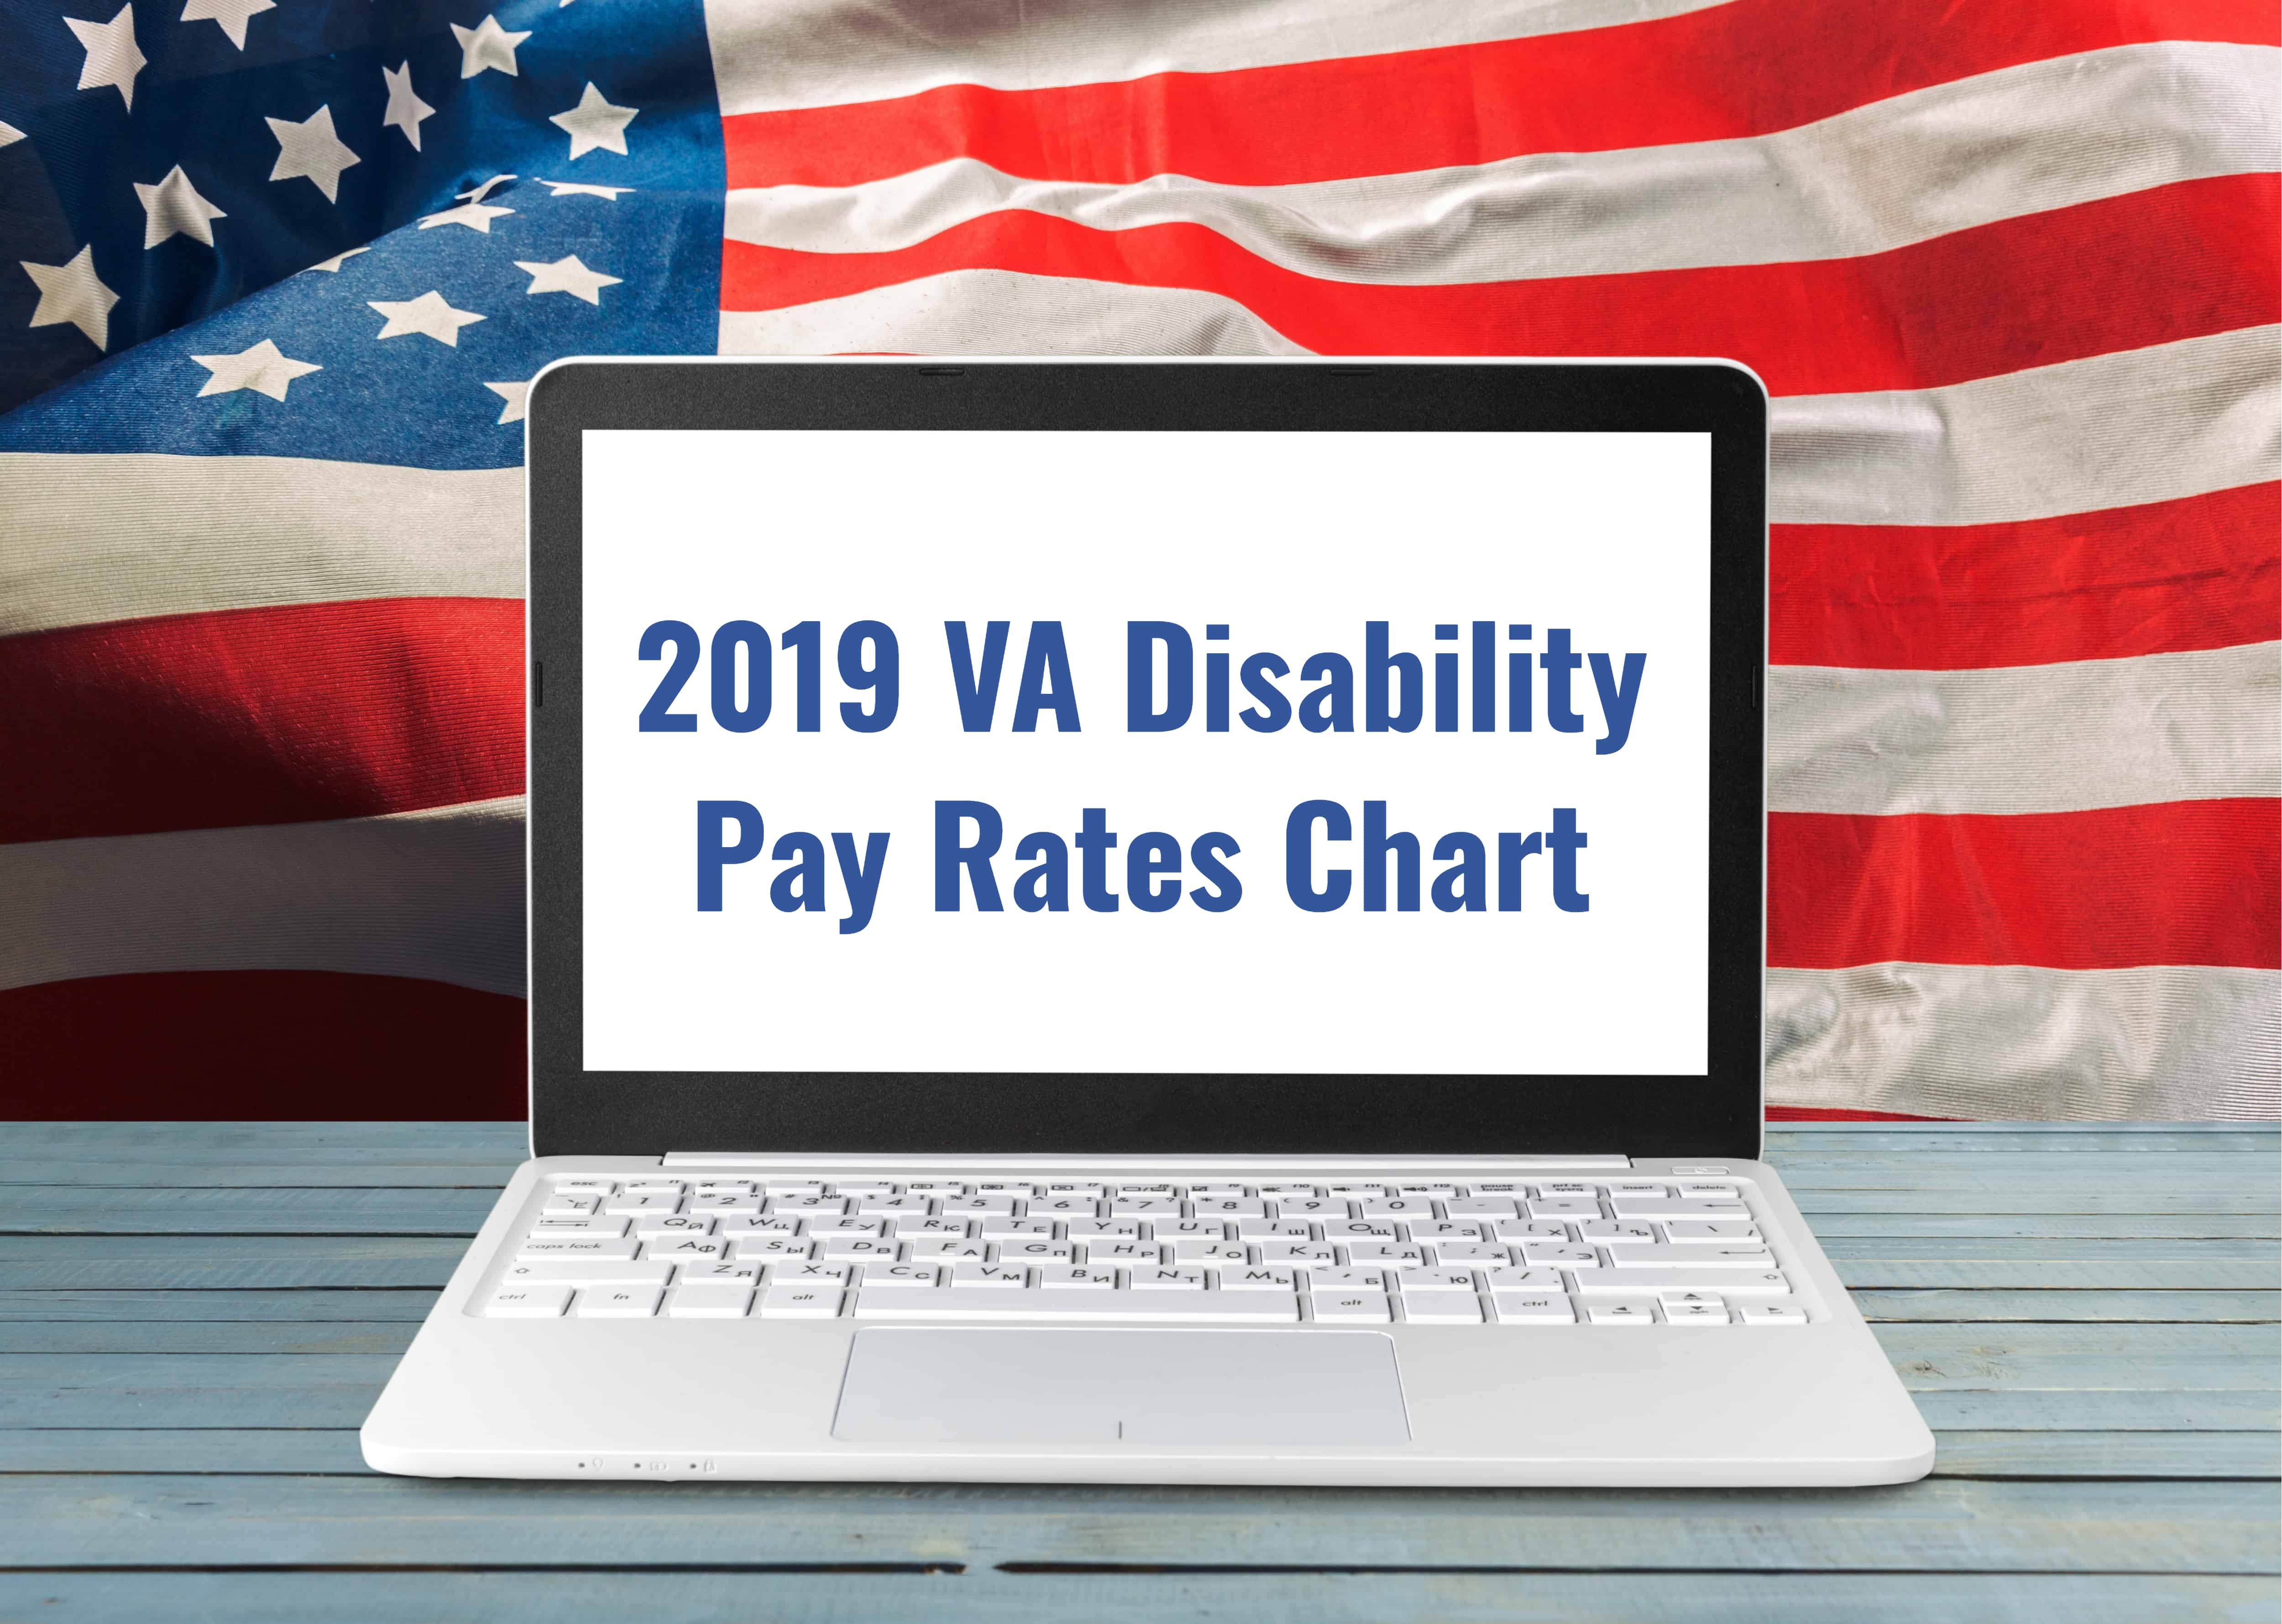 2019 VA Disability Compensation Pay Rates 2019 VA pay rates chart header image